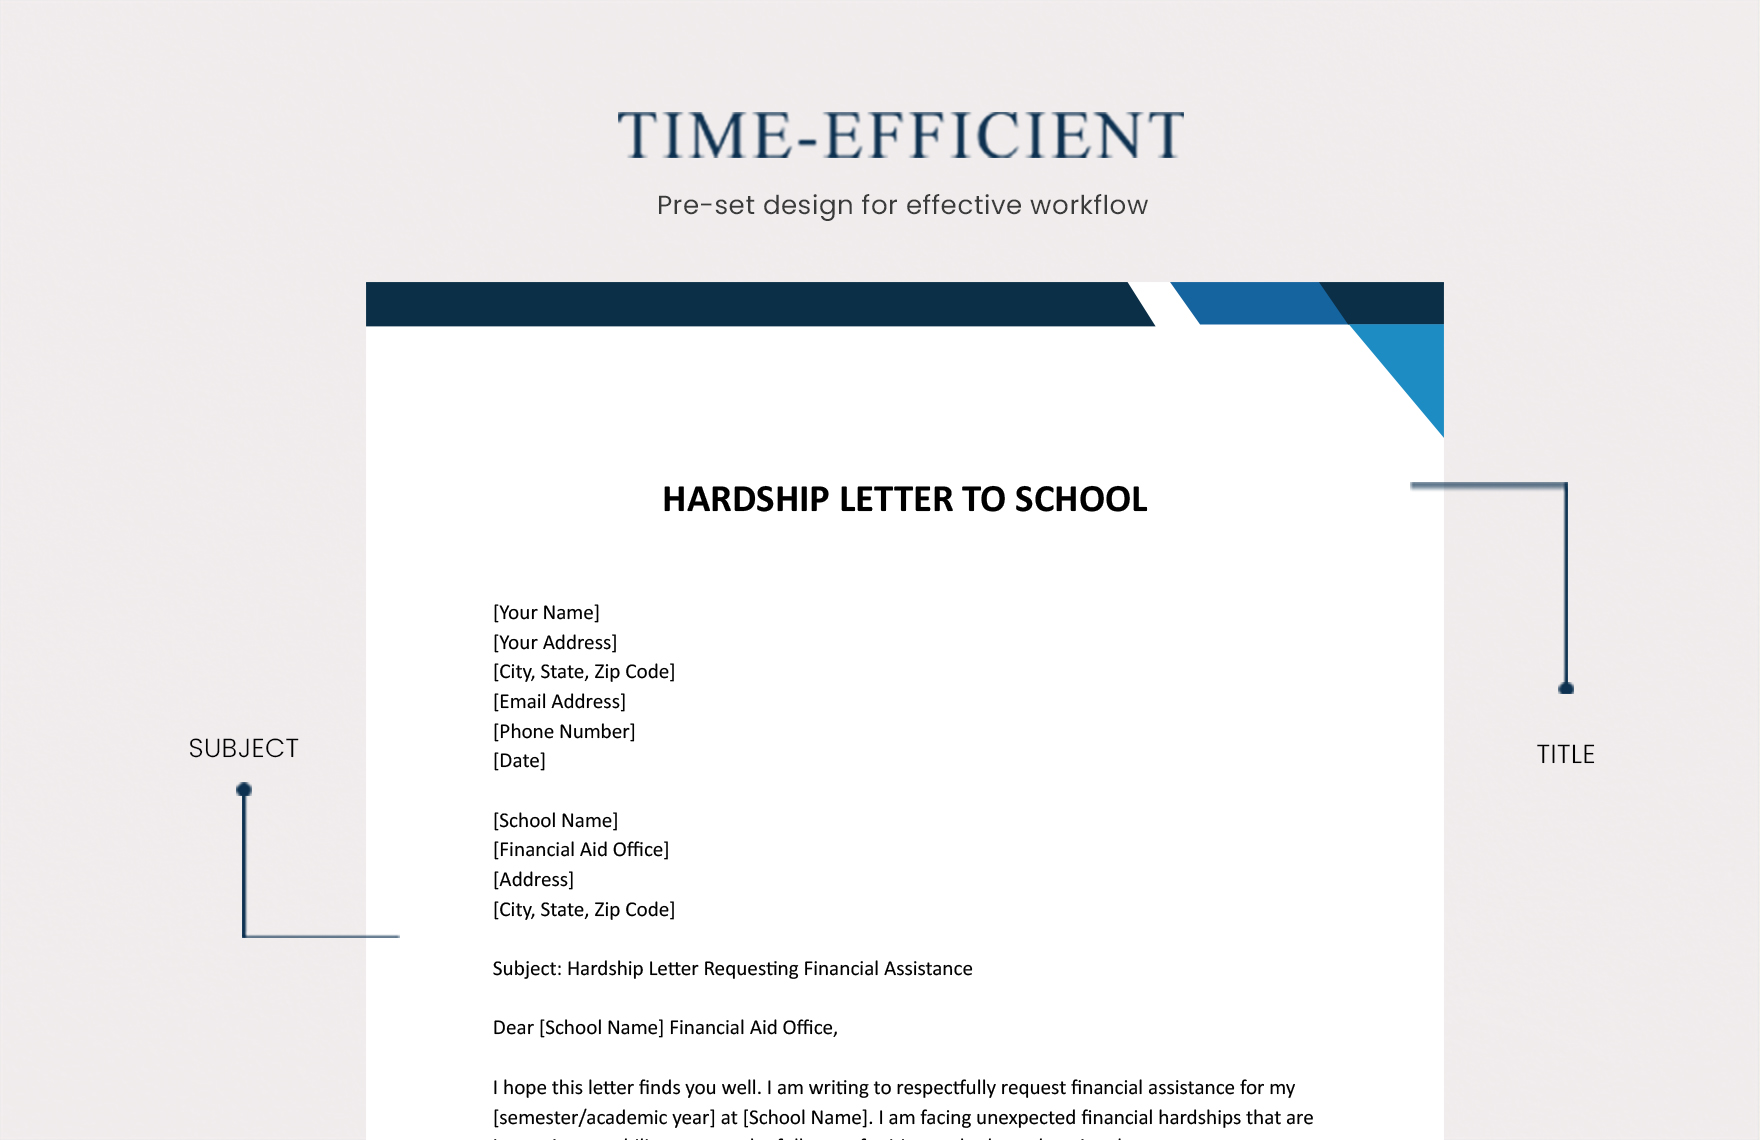 Hardship Letter to School